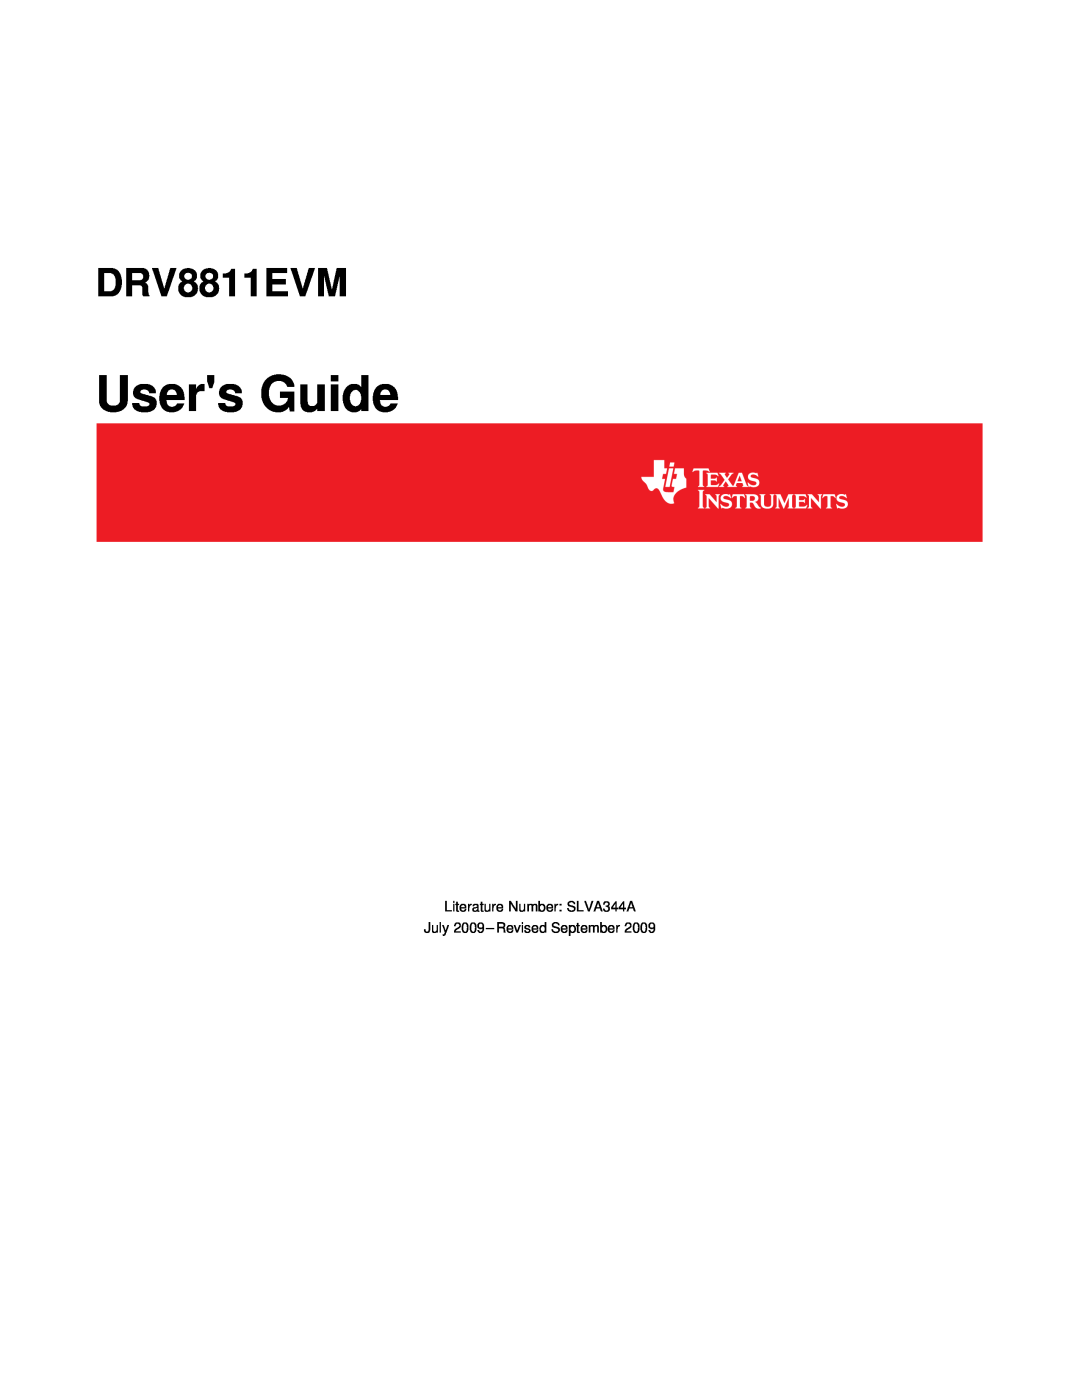 Texas Instruments DRV8811EVM manual Users Guide 